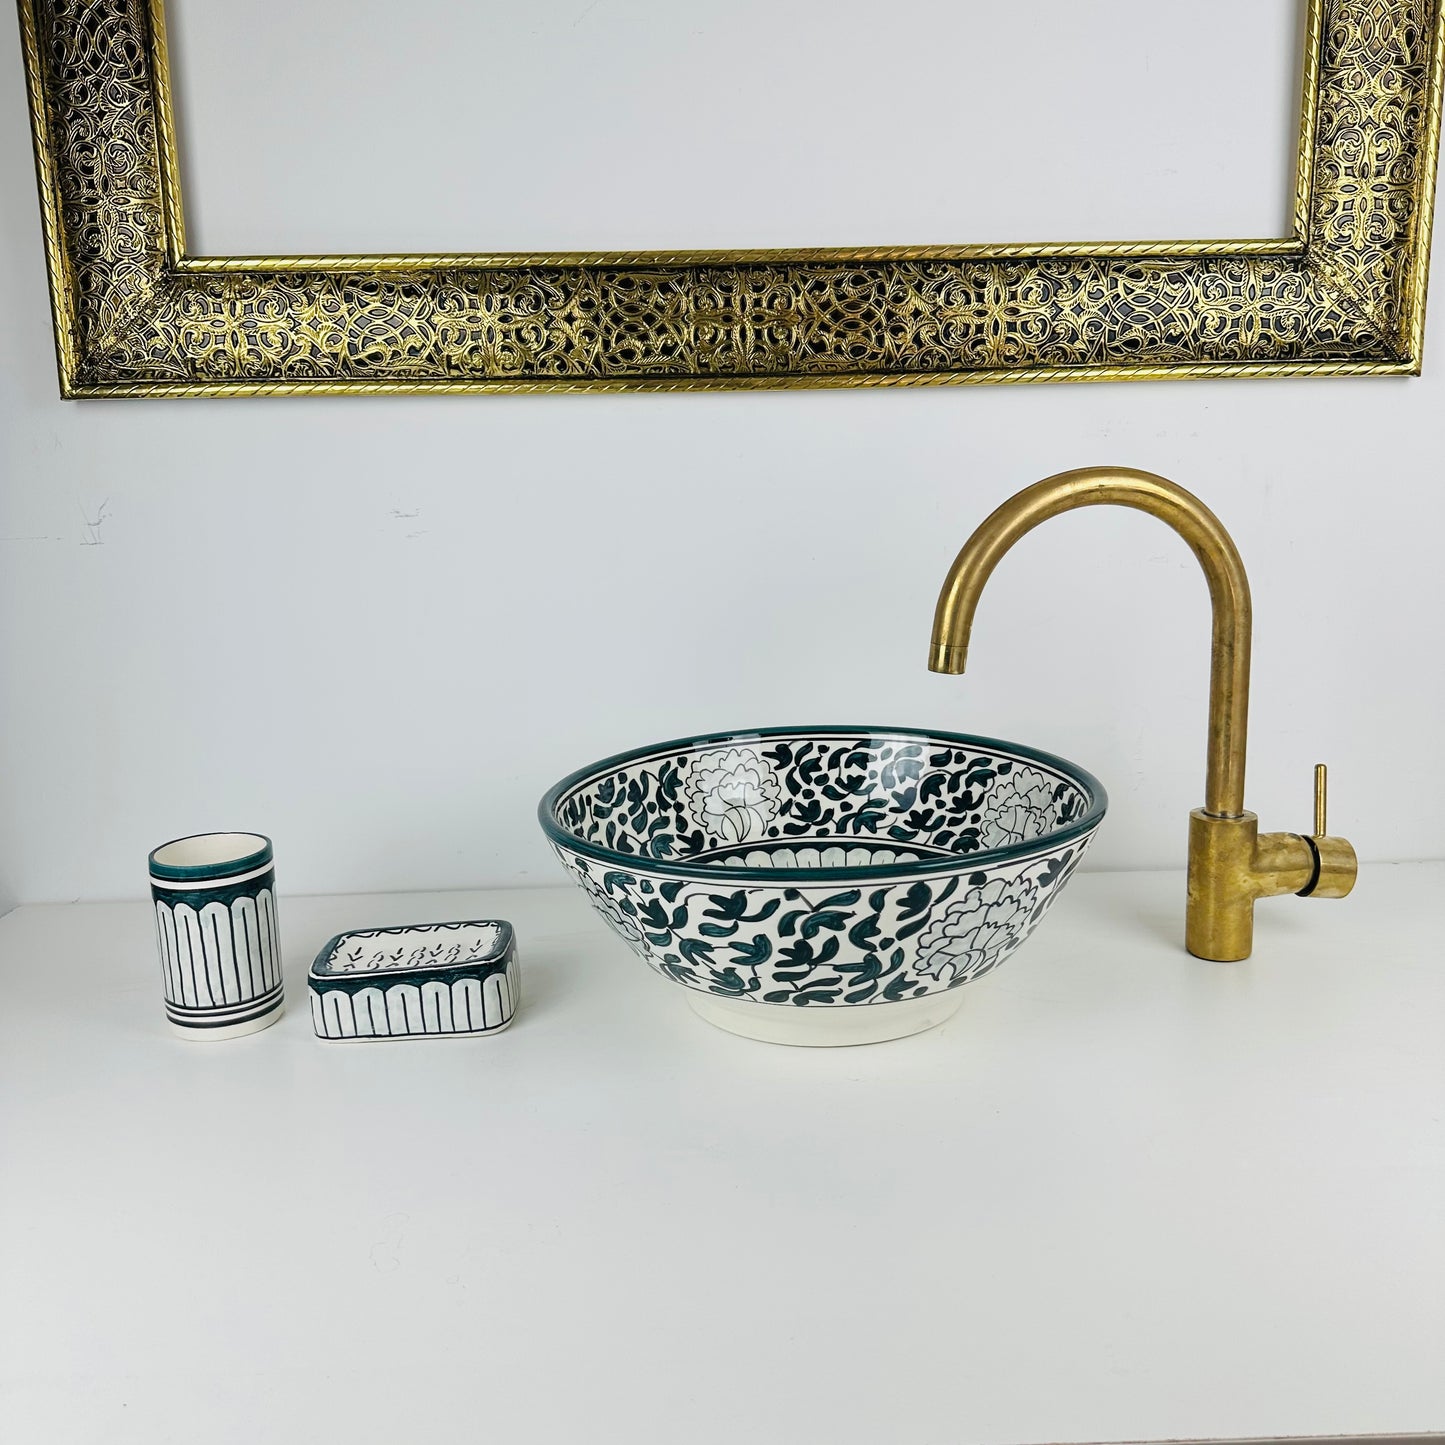 Verdant Bloom: Handcrafted Ceramic Sink with Dark Green Floral Motif